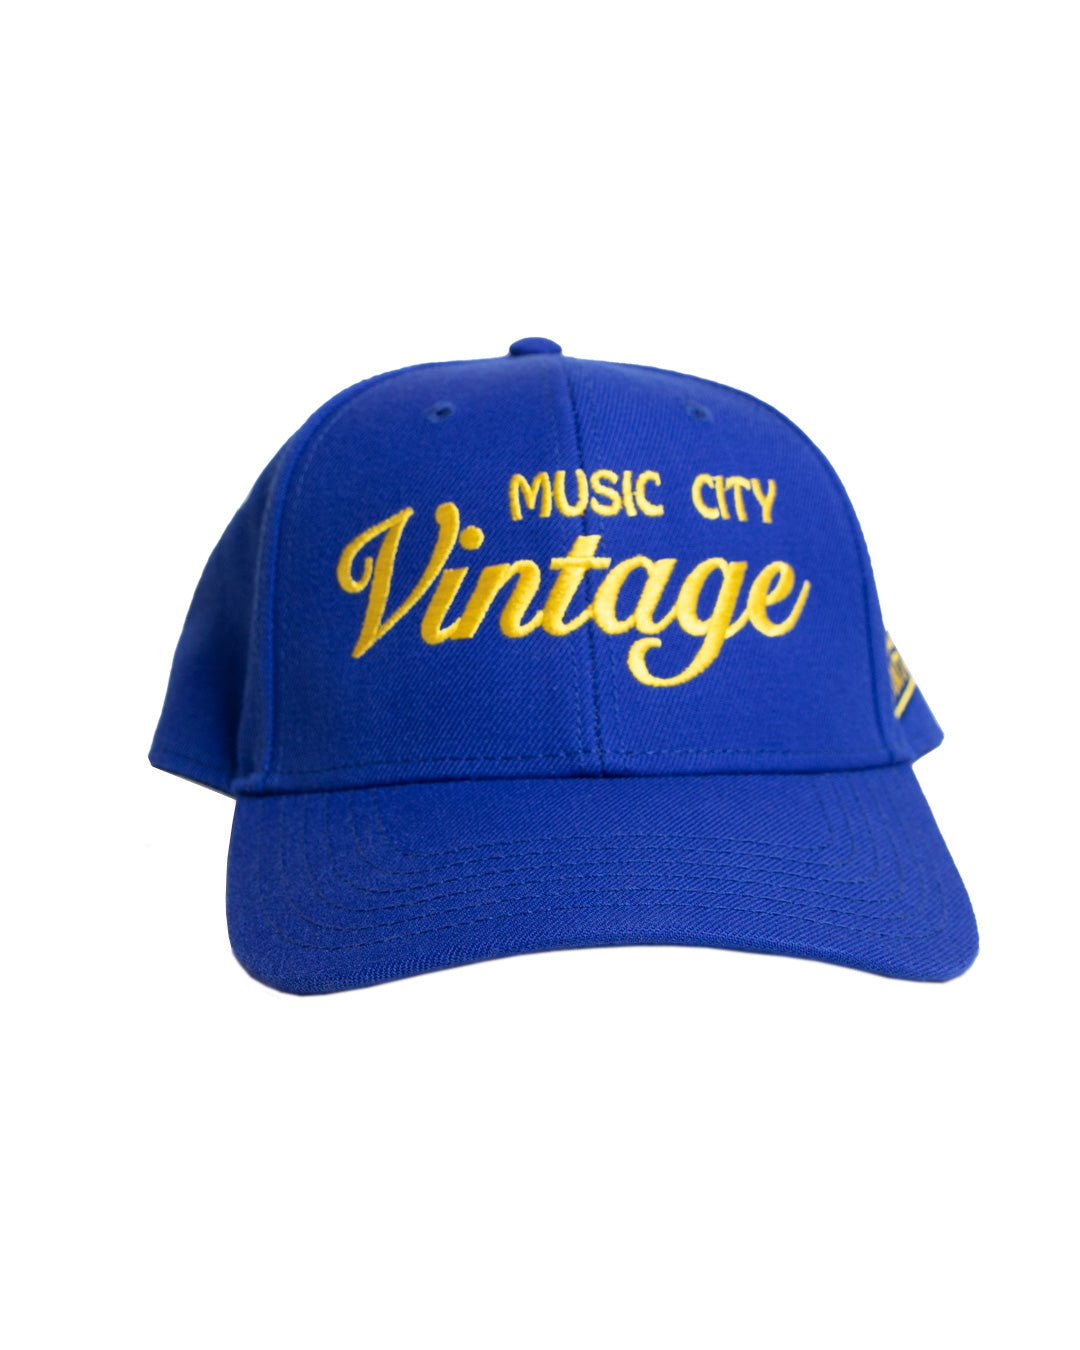 Music City Vintage Blockbuster Snapback (Royal)